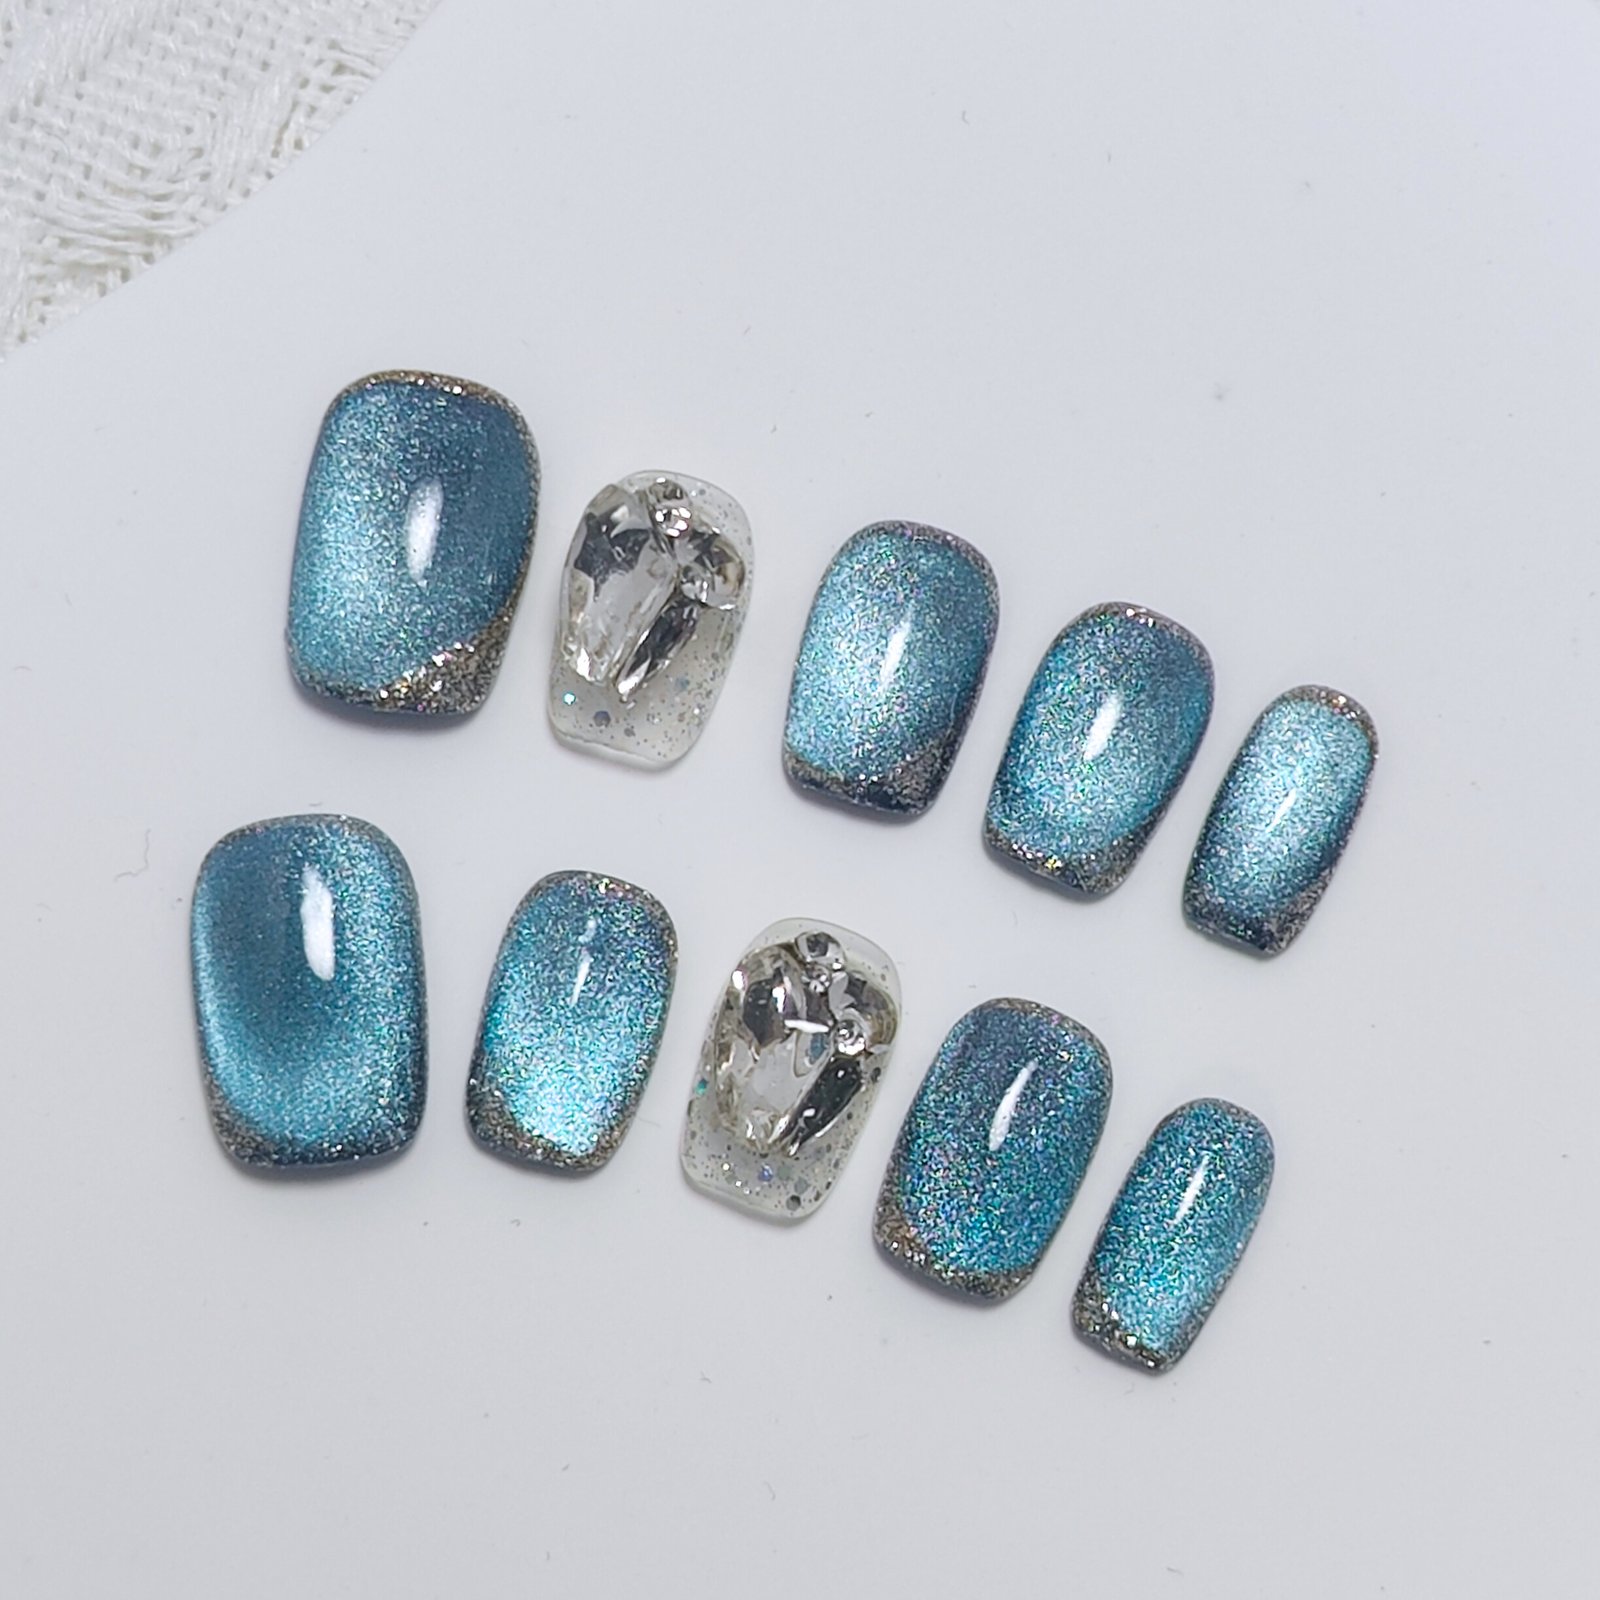 Sparkly Lake Baikal Blue Diamond Nails Luxury Handmade Blue Press on nails